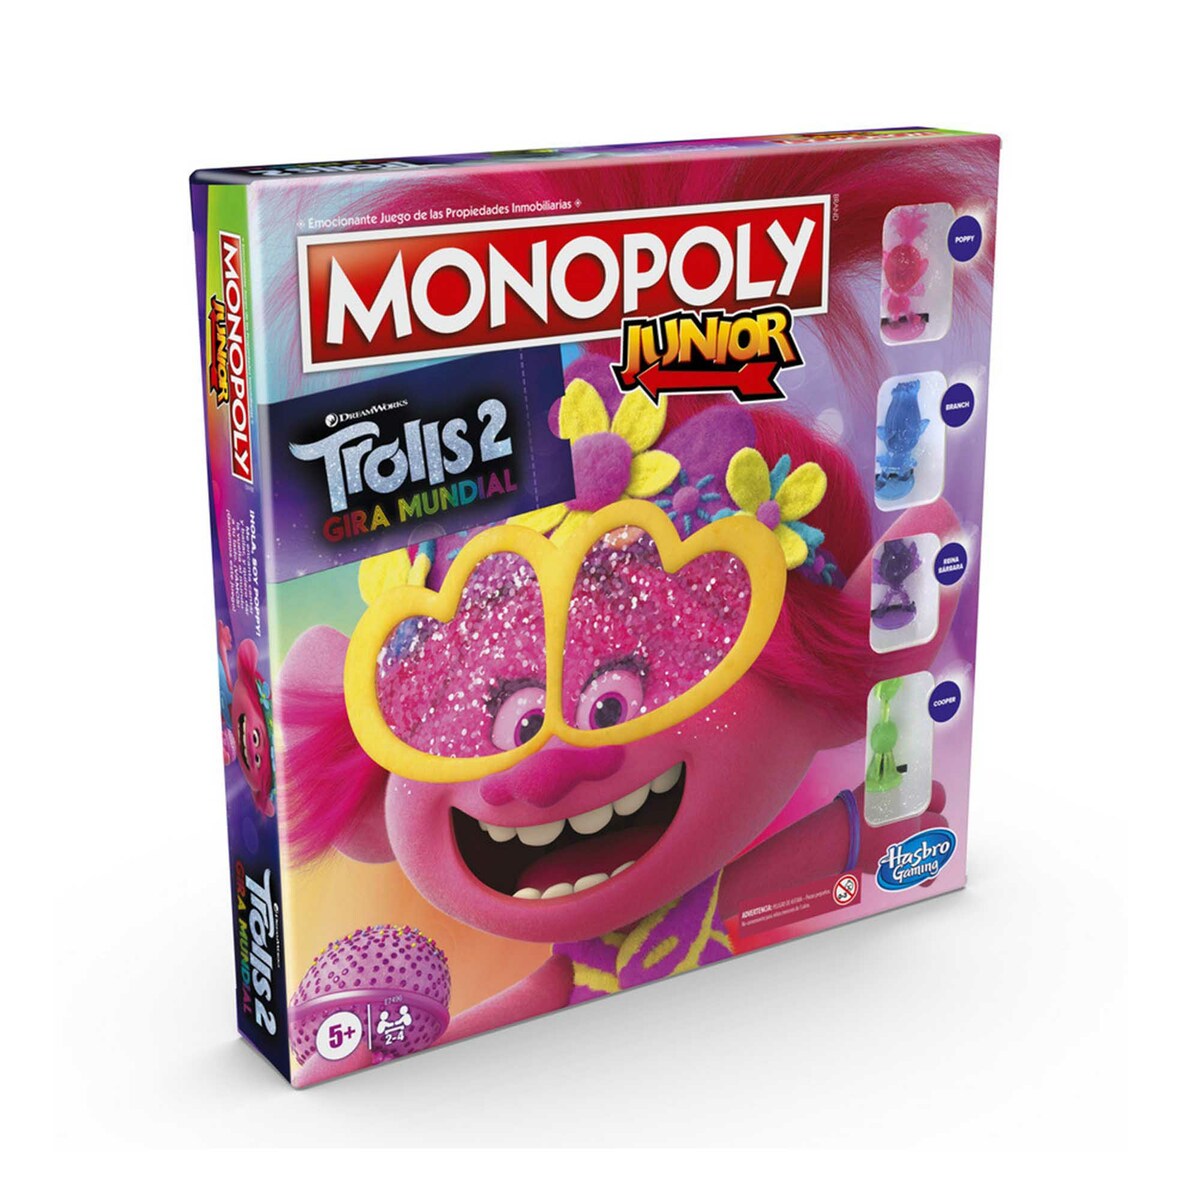 Monopoly Junior Trolls E7496